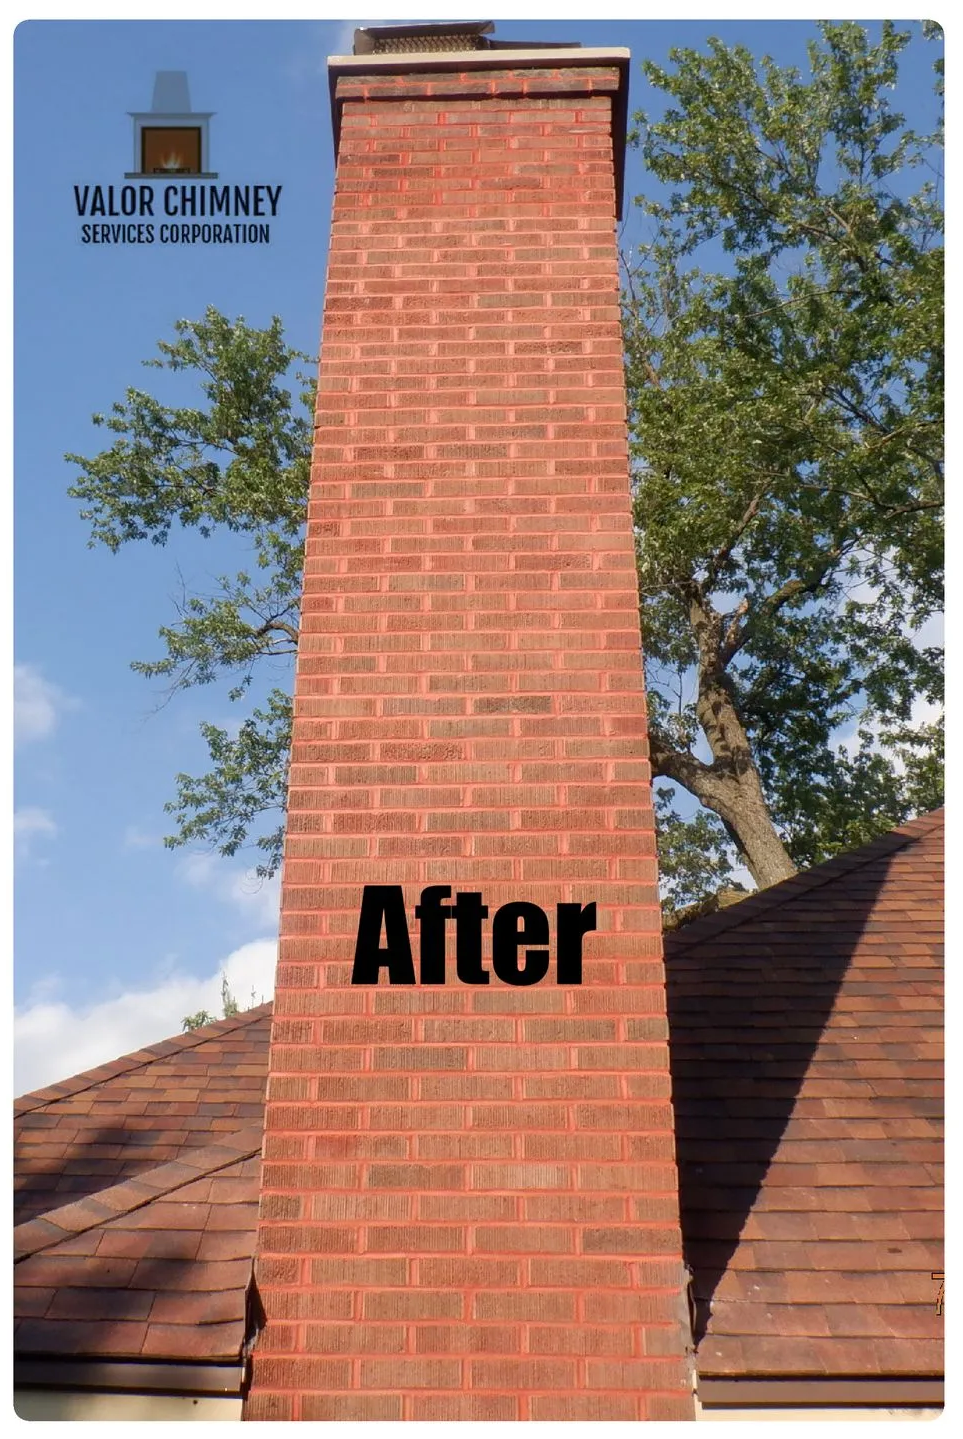 Chimney Bricks After Repair - Elgin, IL - Valor Chimney Services Corporation